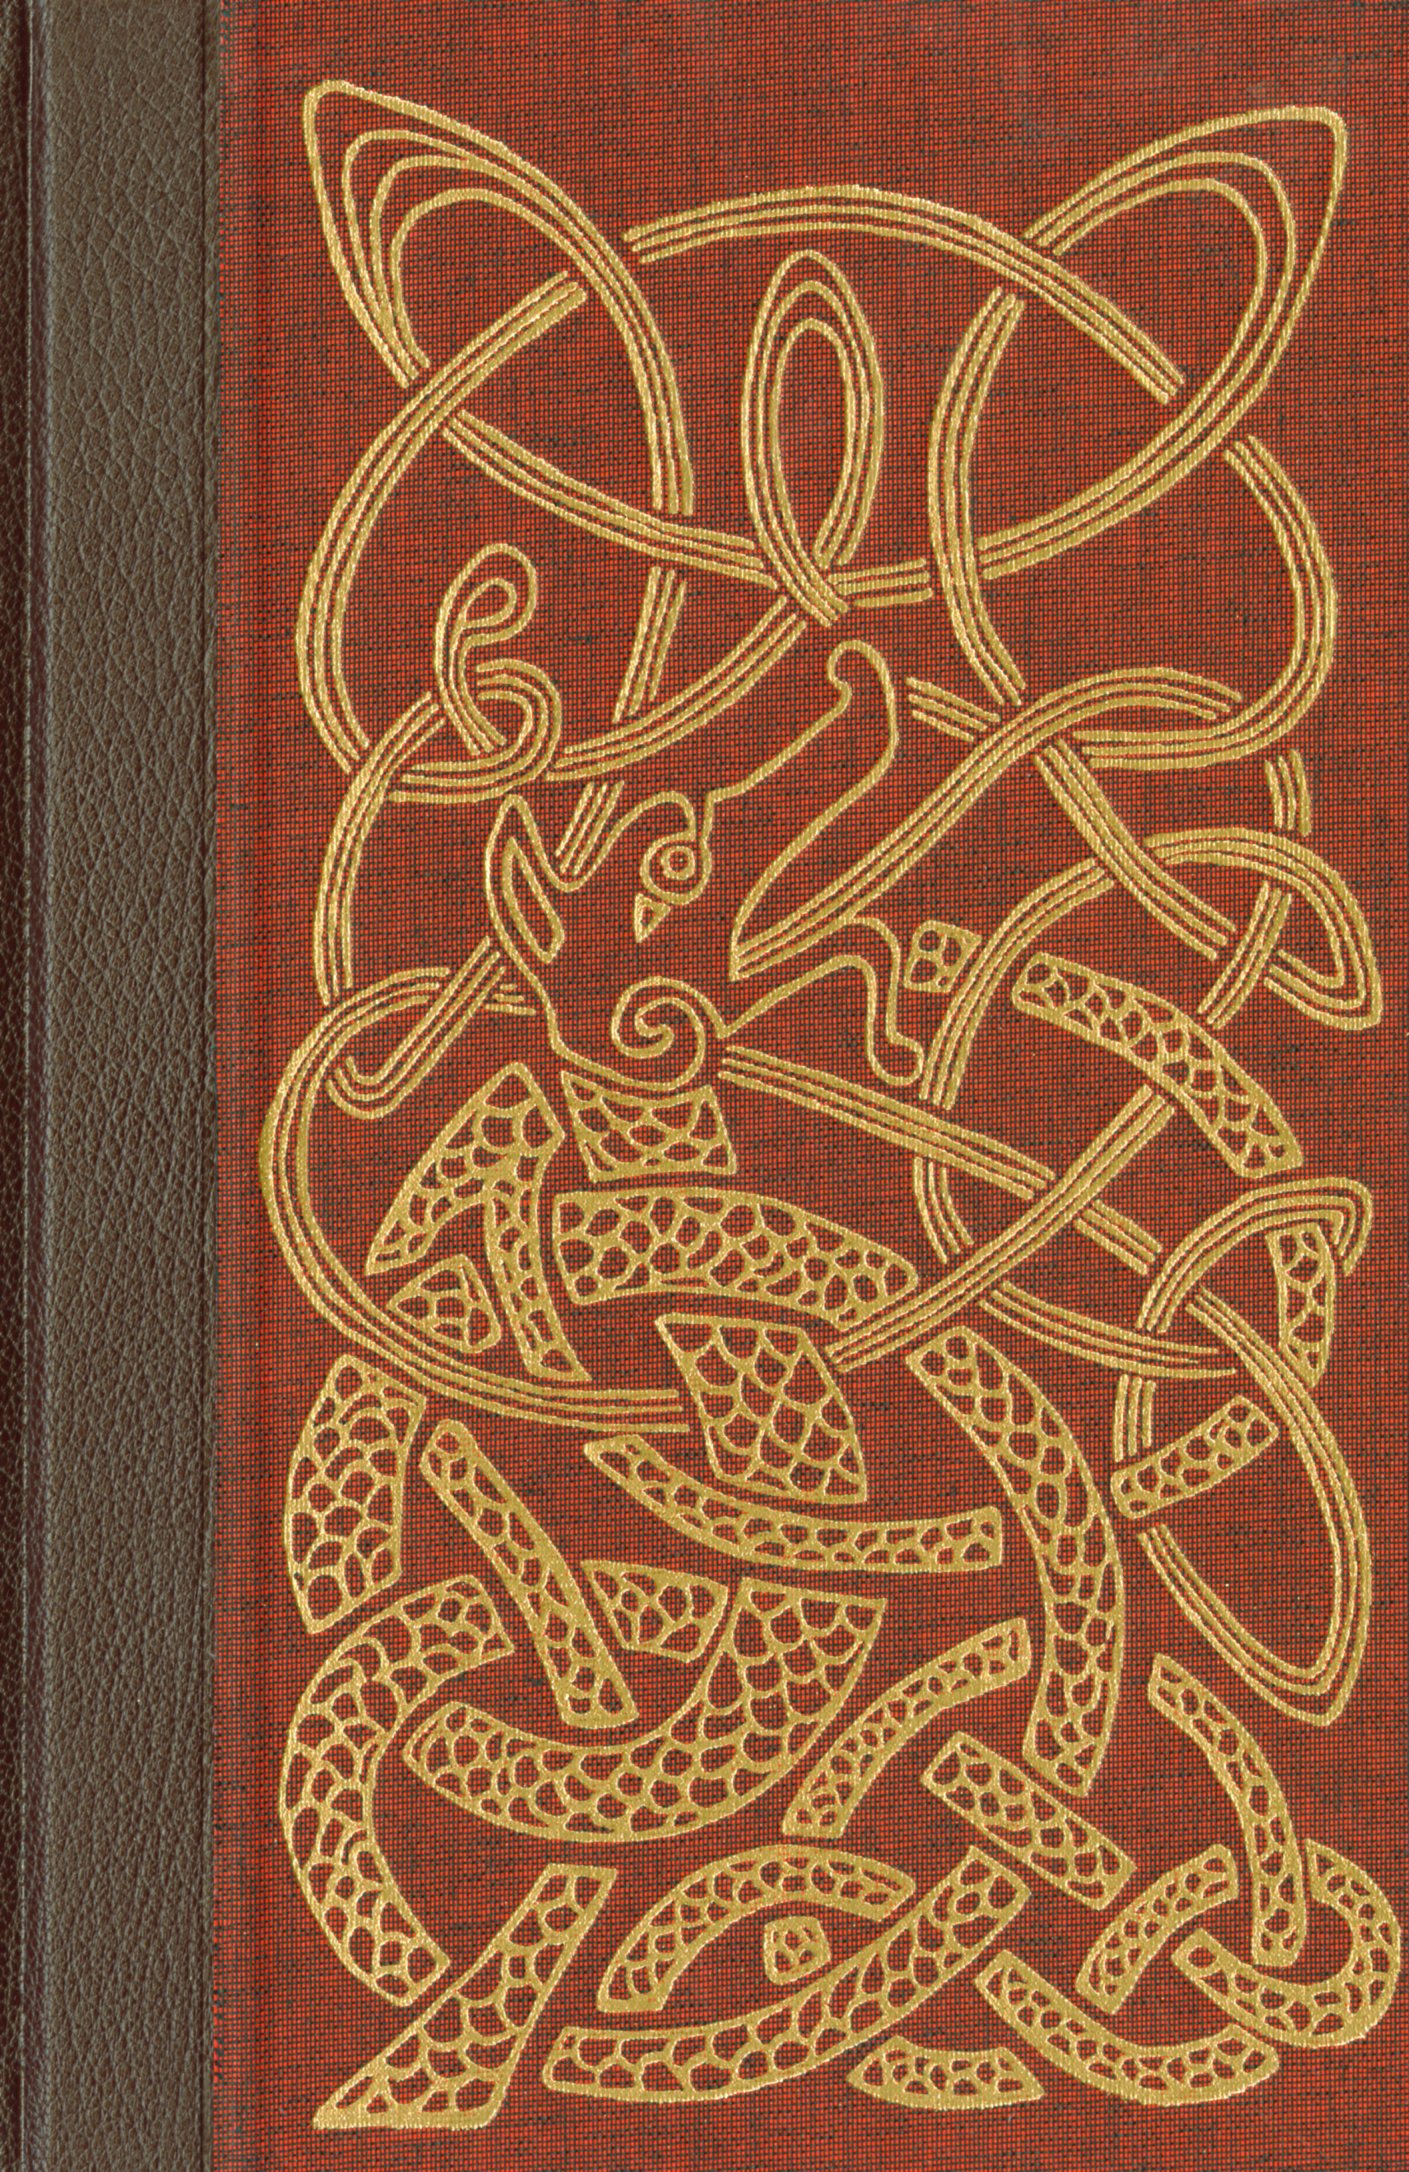 Heaney (S.) & Thorne (B.) illus. Beowulf, A Verse Translation, sm. folio, L. - Image 2 of 2